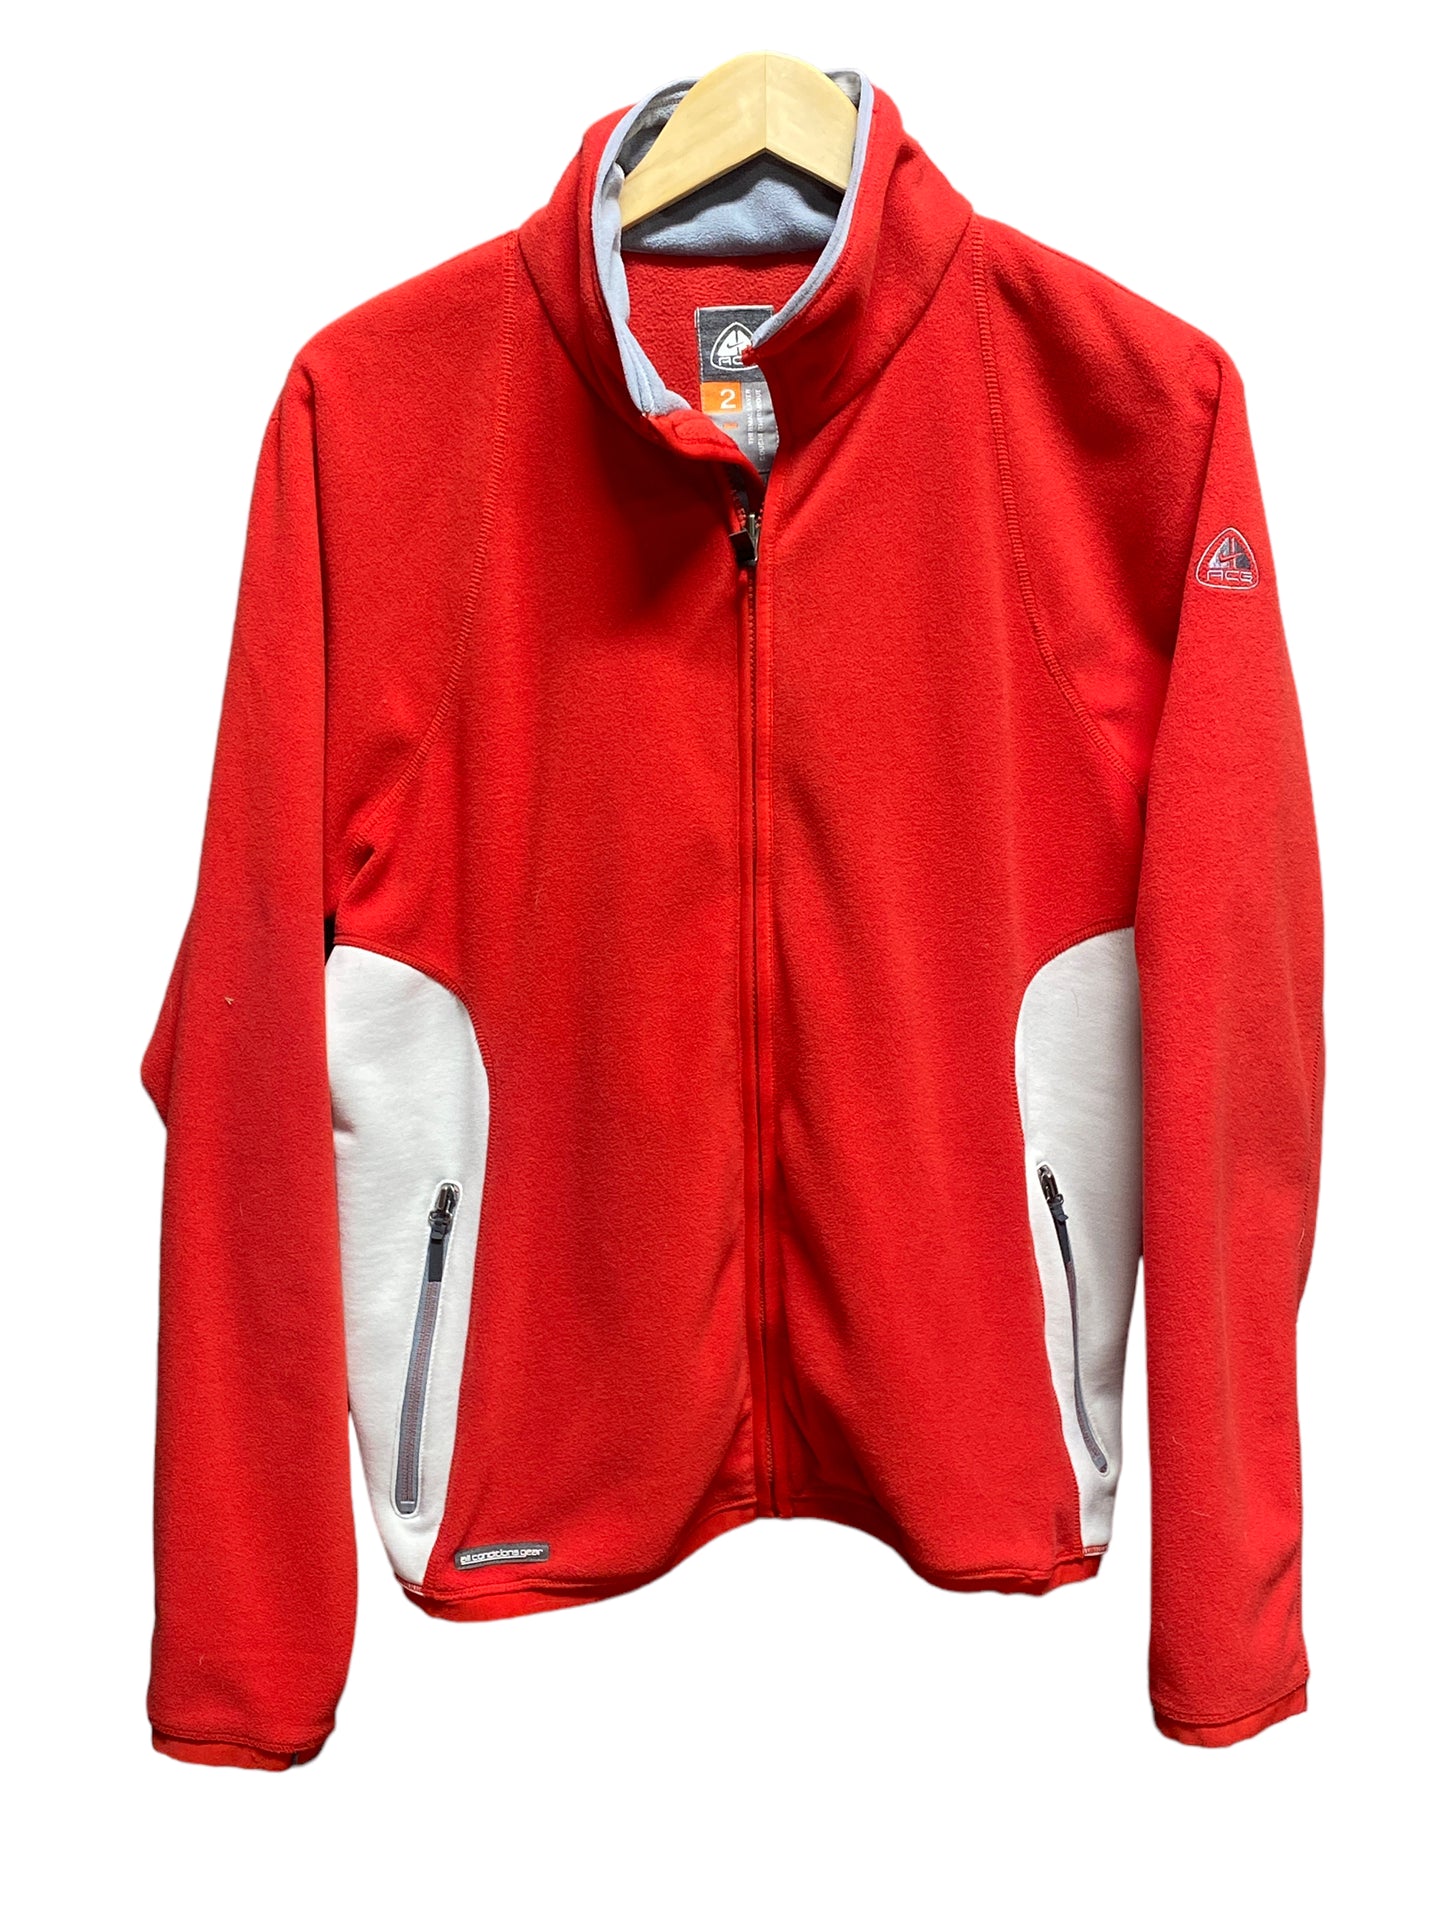 Vintage Nike ACG Fleece Thermal Layer 2 Zip Up Jacket Size XL